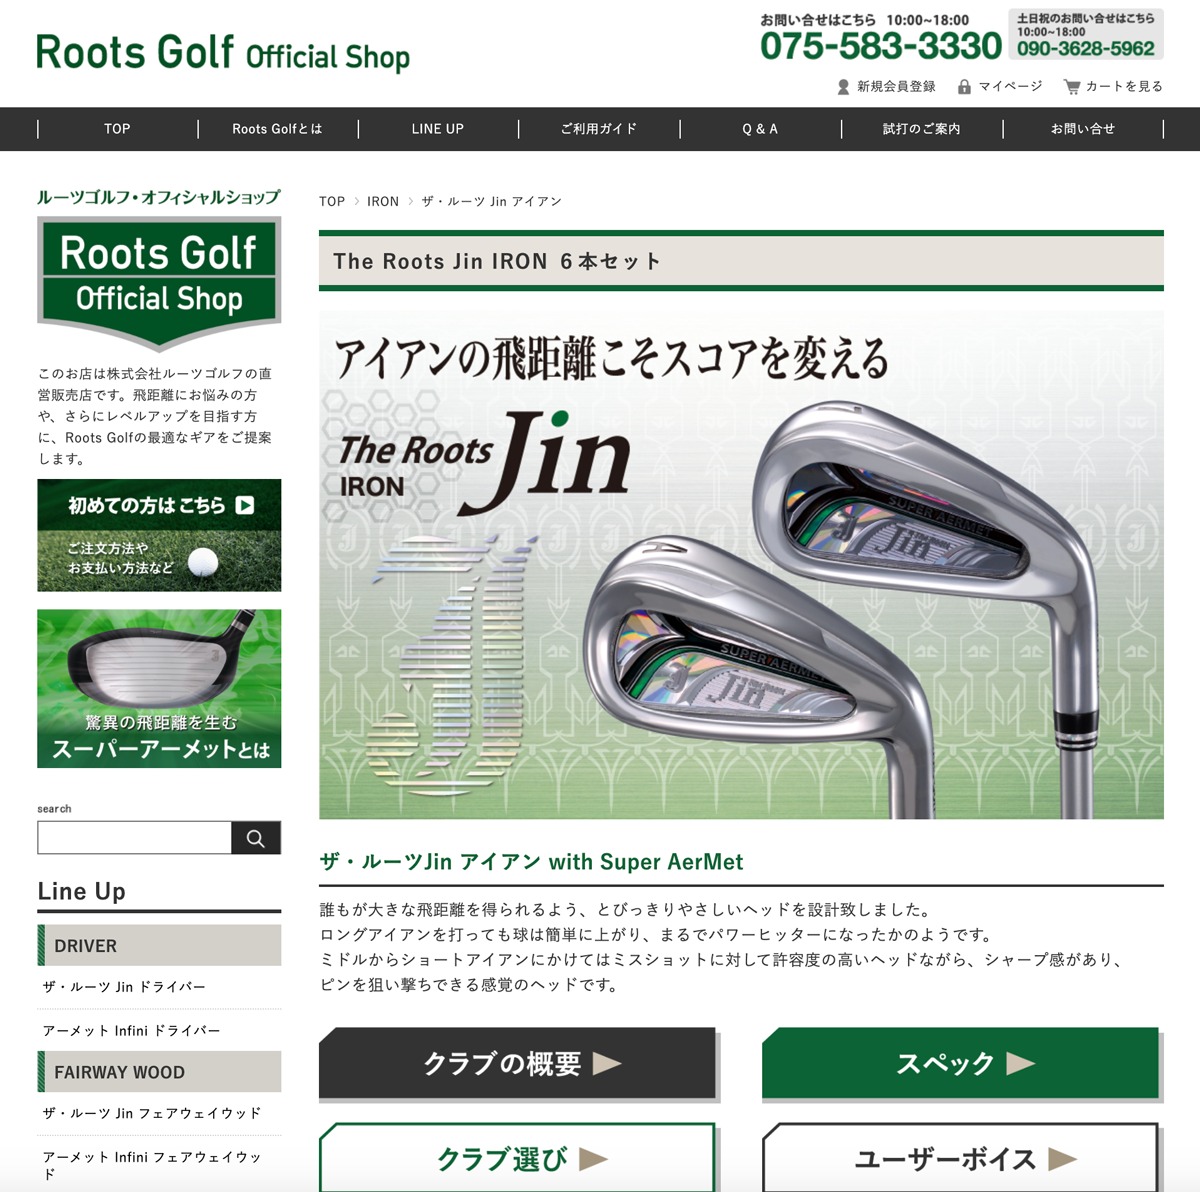 Roots Golf Official Shop